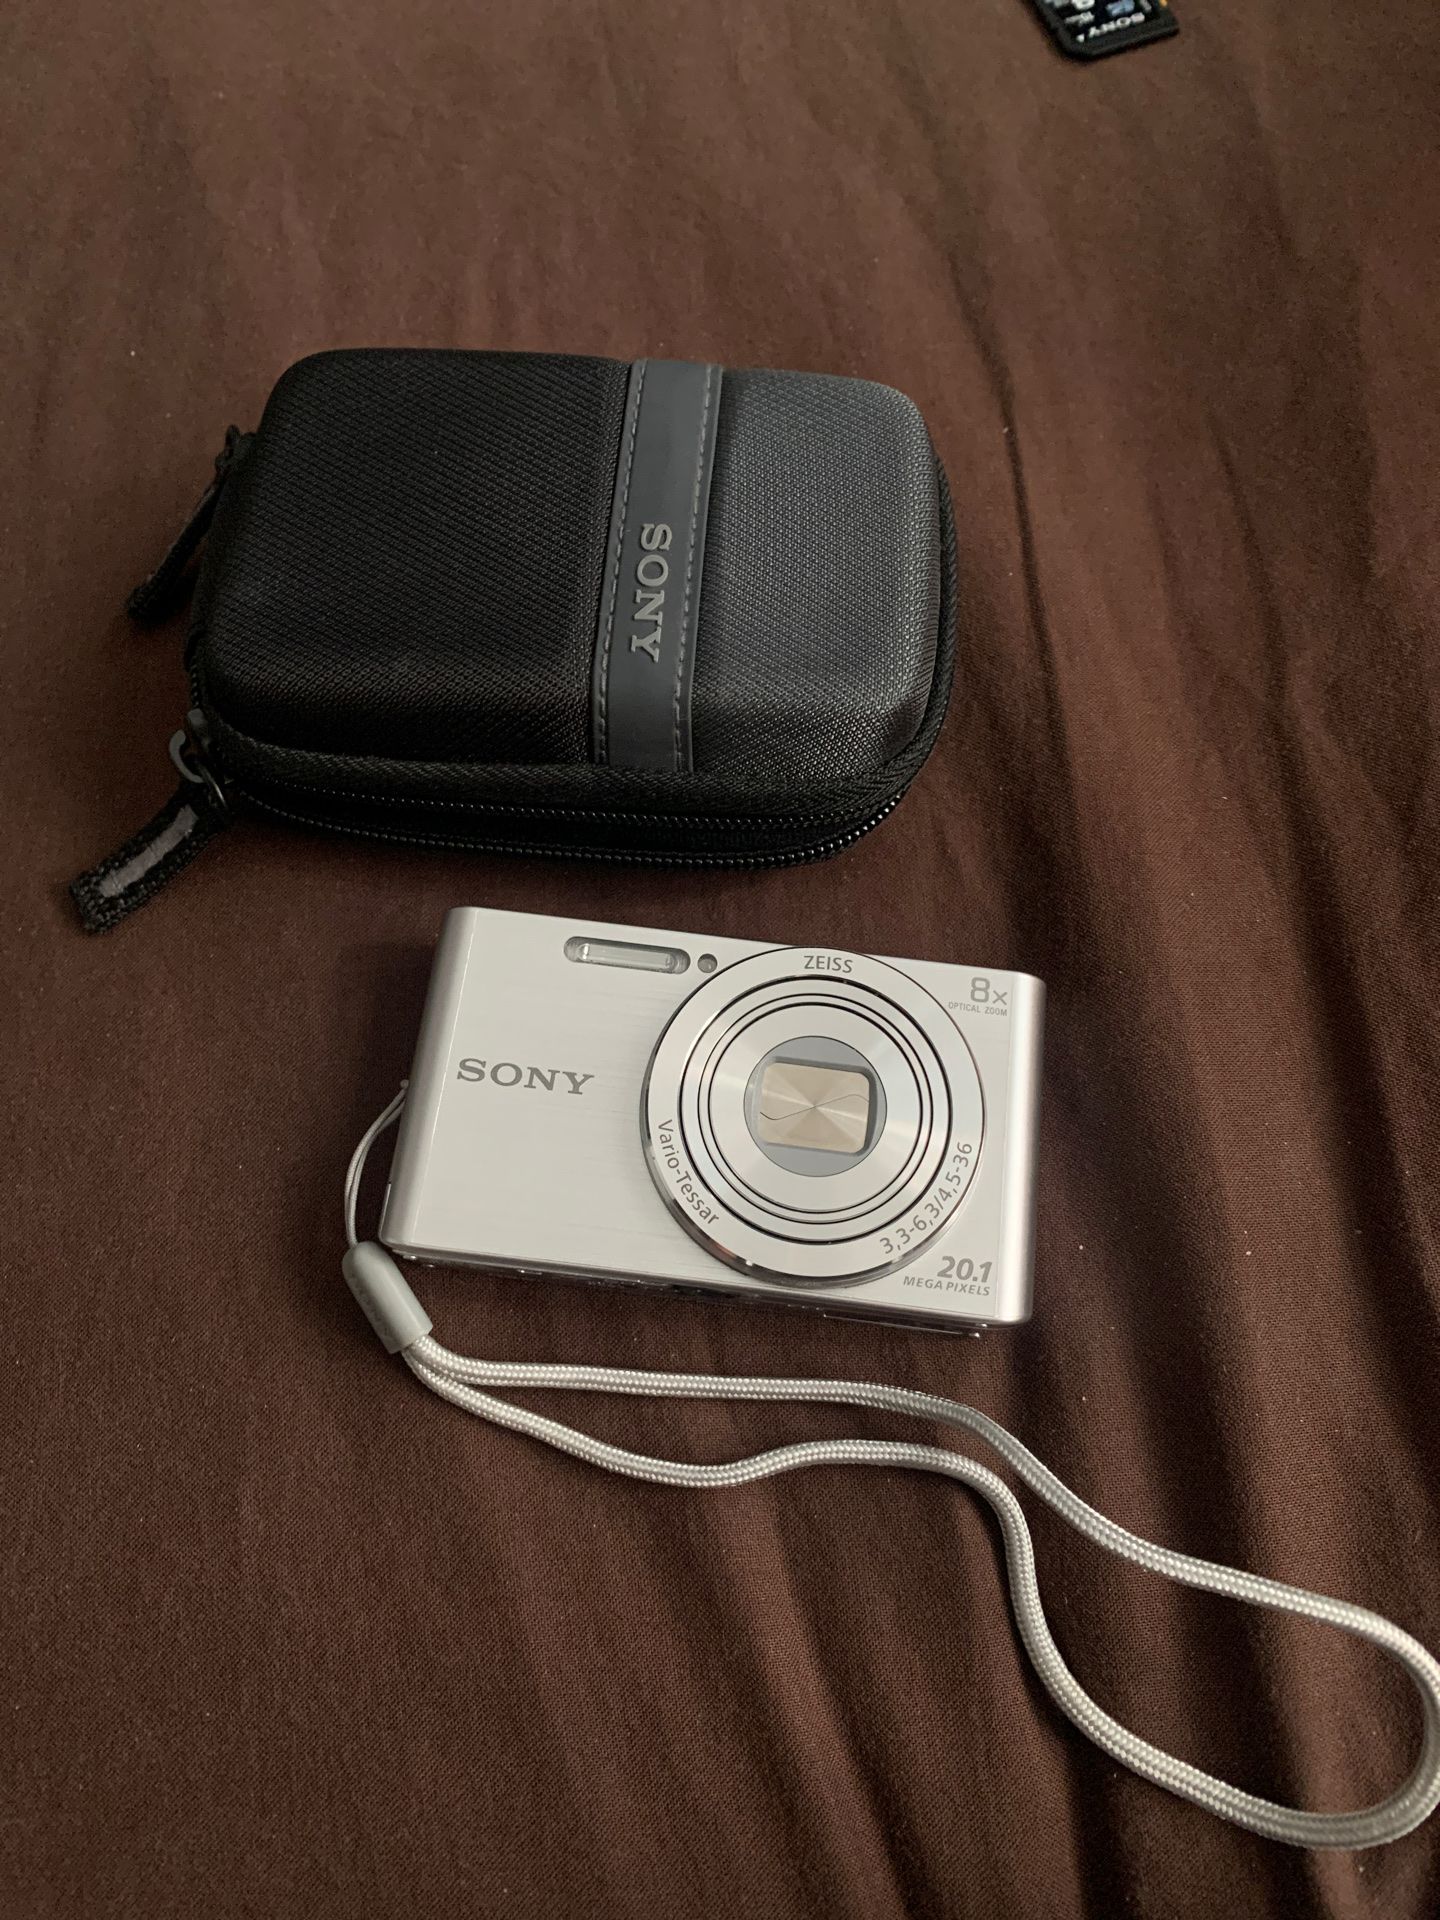 Sony Cyber-Shot DSC-W830 Digital Point and Shoot Camera Silver